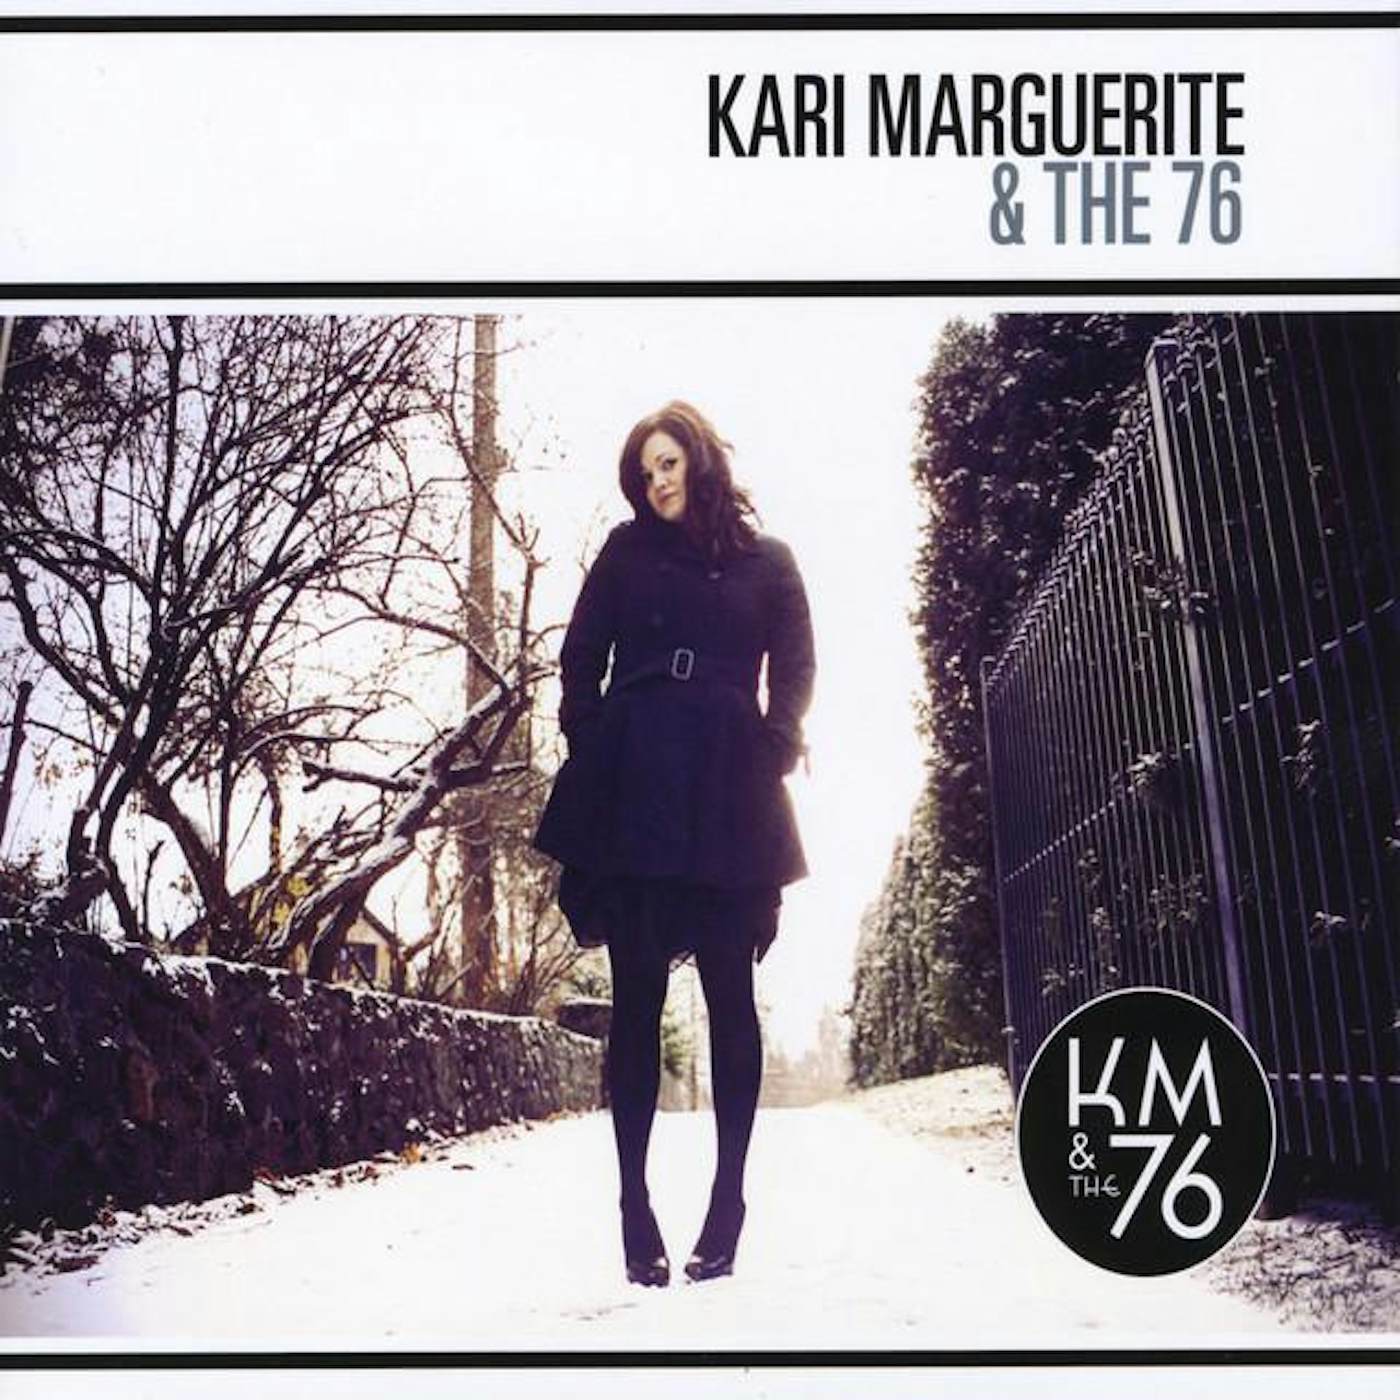 Kari Marguerite and The 76